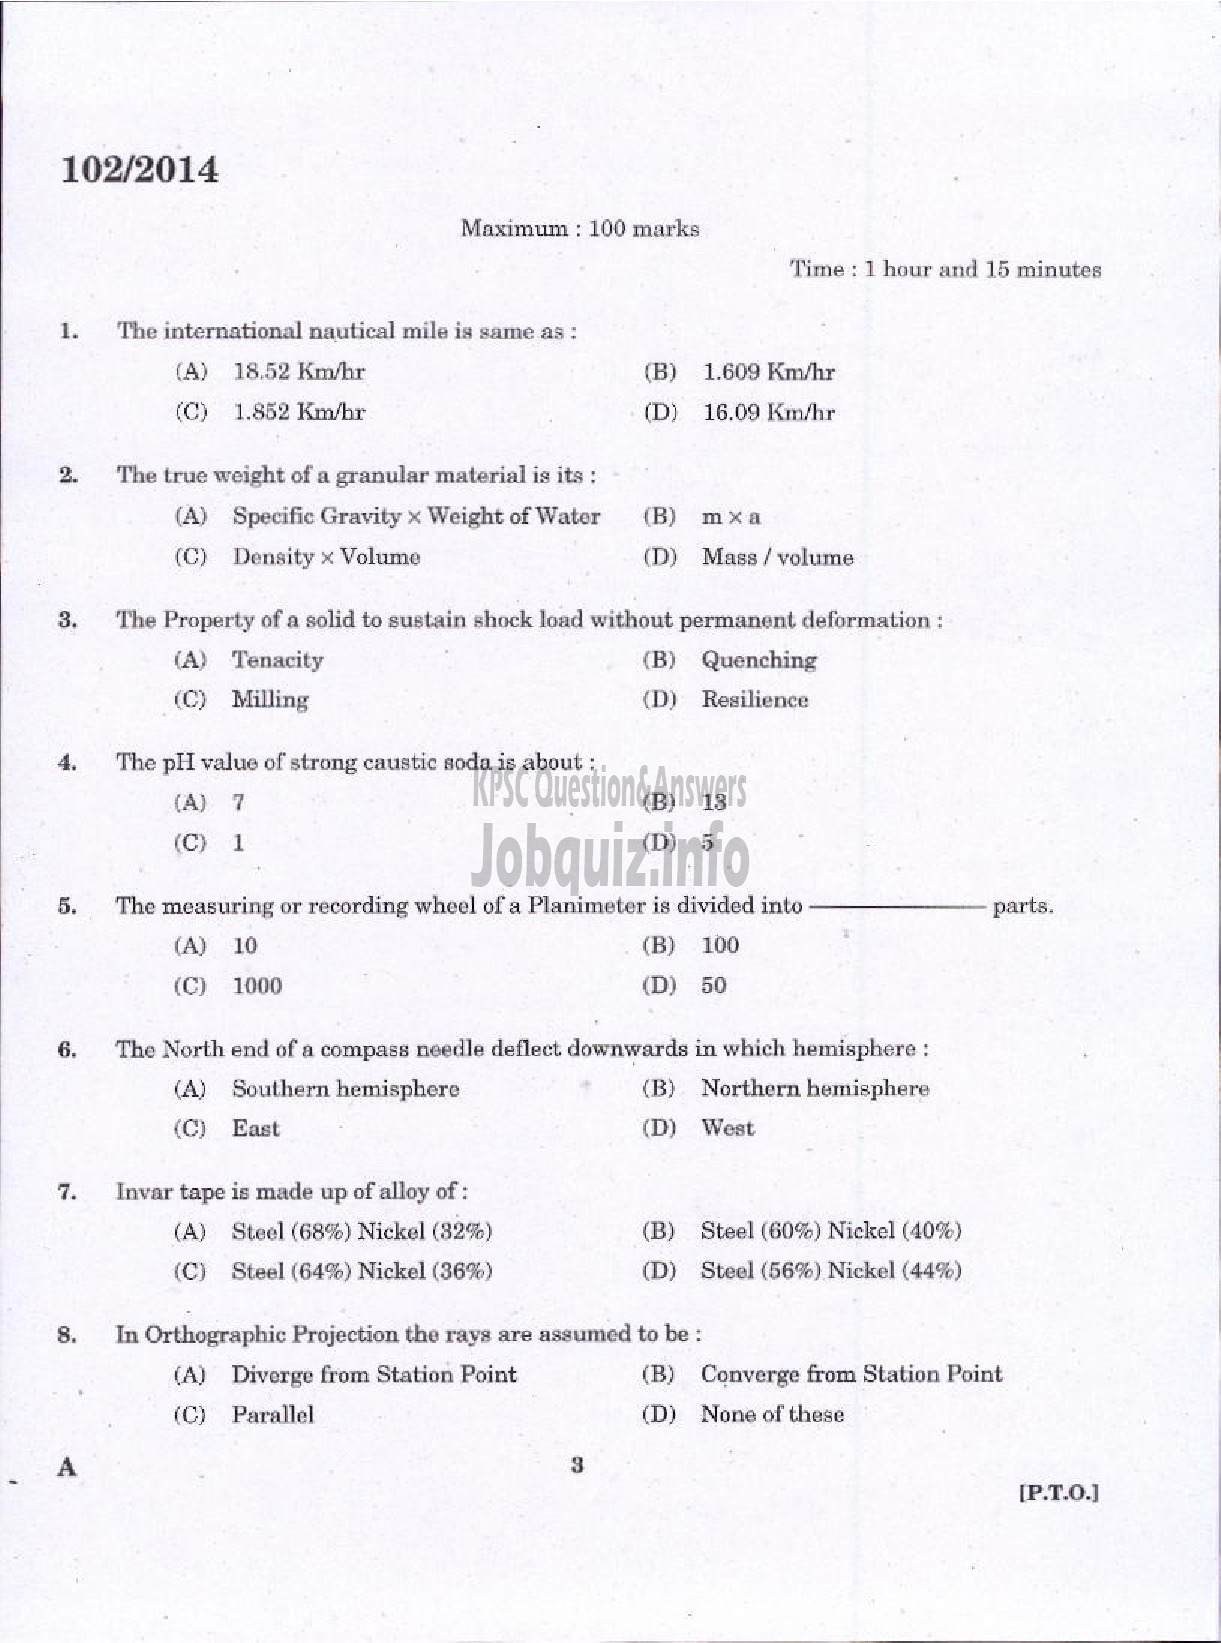 Kerala PSC Question Paper - III GRADE OVERSEER CIVIL SR FOR SC ST IRRIGATION AND II GRADE OVERSEER TRACER PUBLIC WORKS IRRIGATION-1